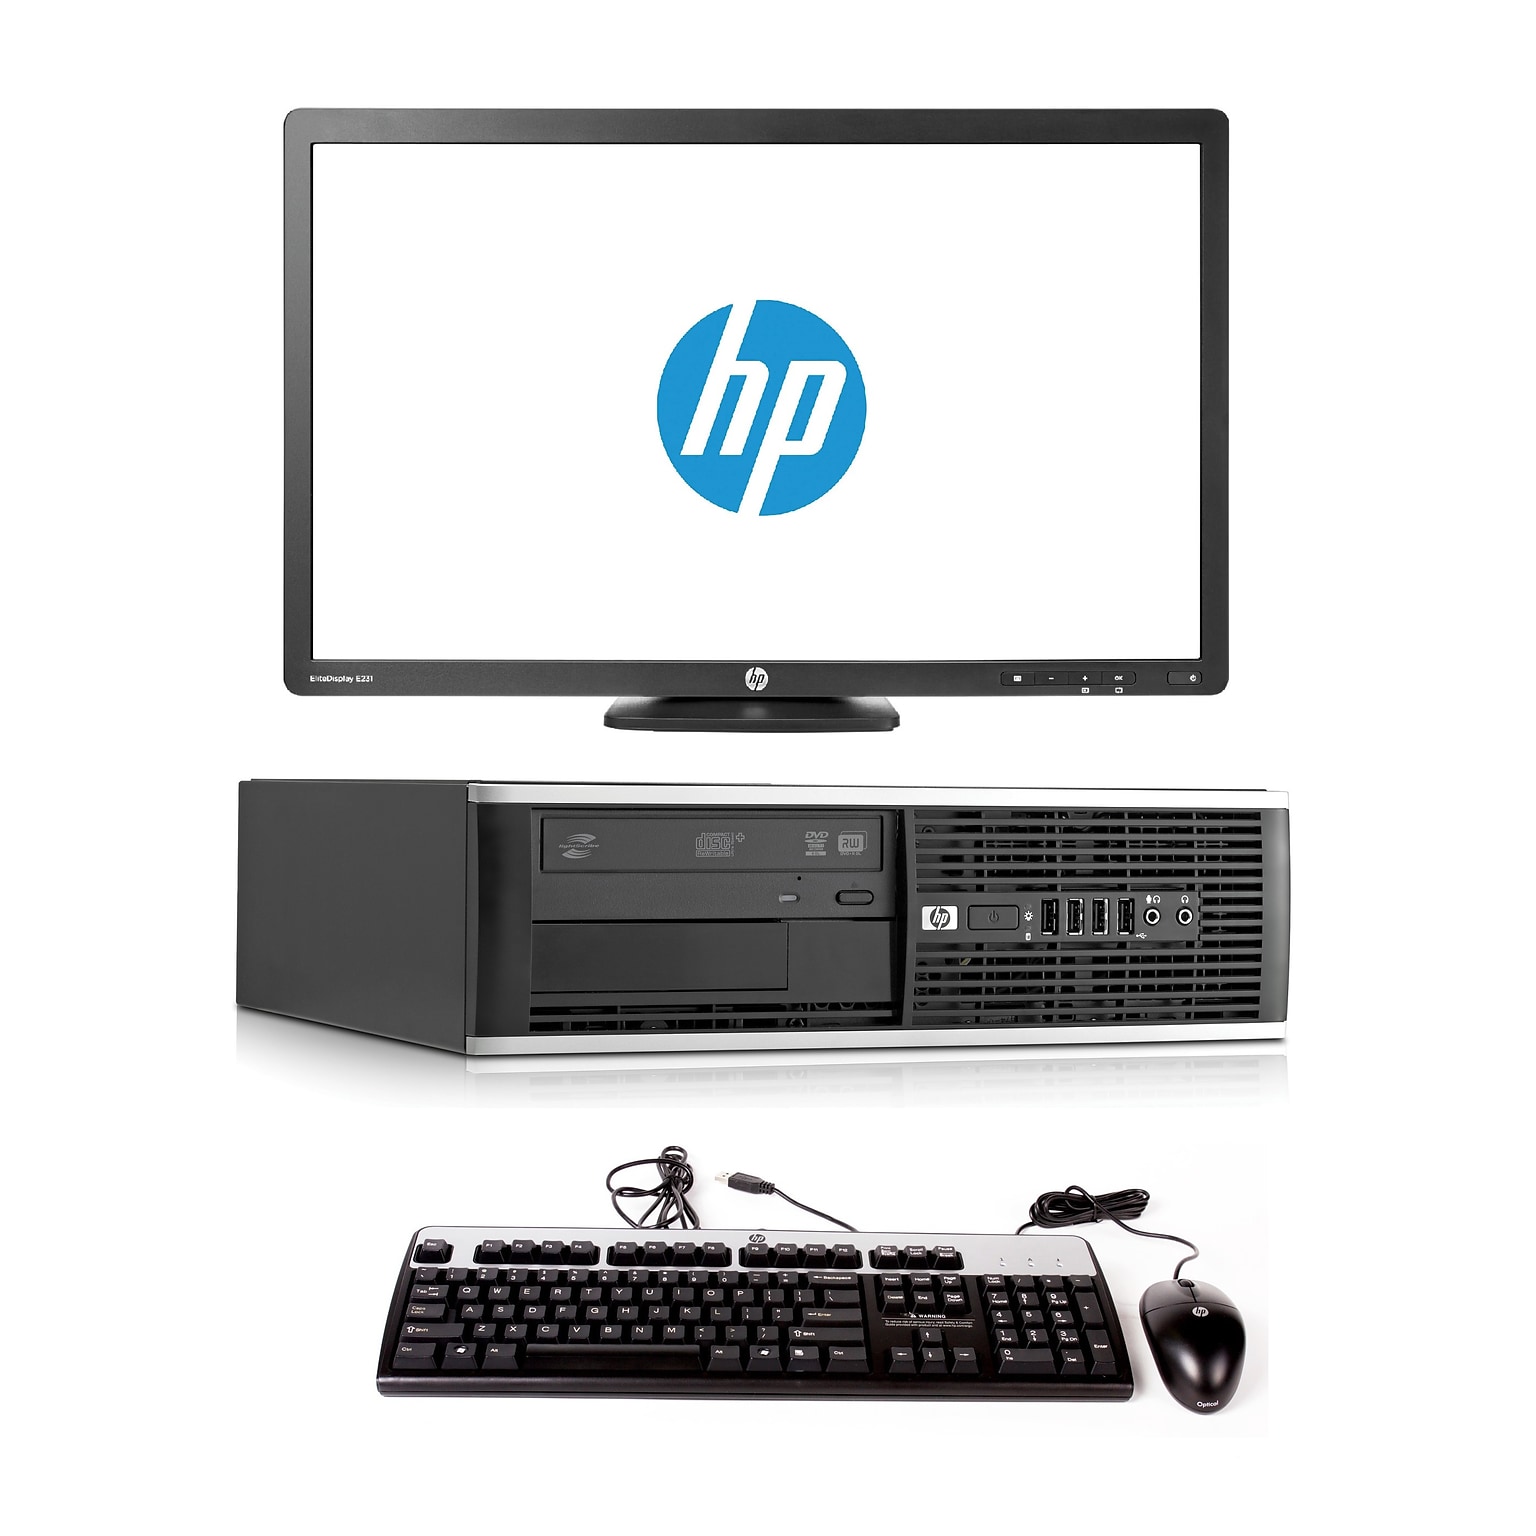 HP 6300 Pro Sff Refubrished Desktop Computer with 22 LCD Monitor, Intel Core i5-3570, 16GB Memory, 1TB HDD, DVD Windows 10 Pro